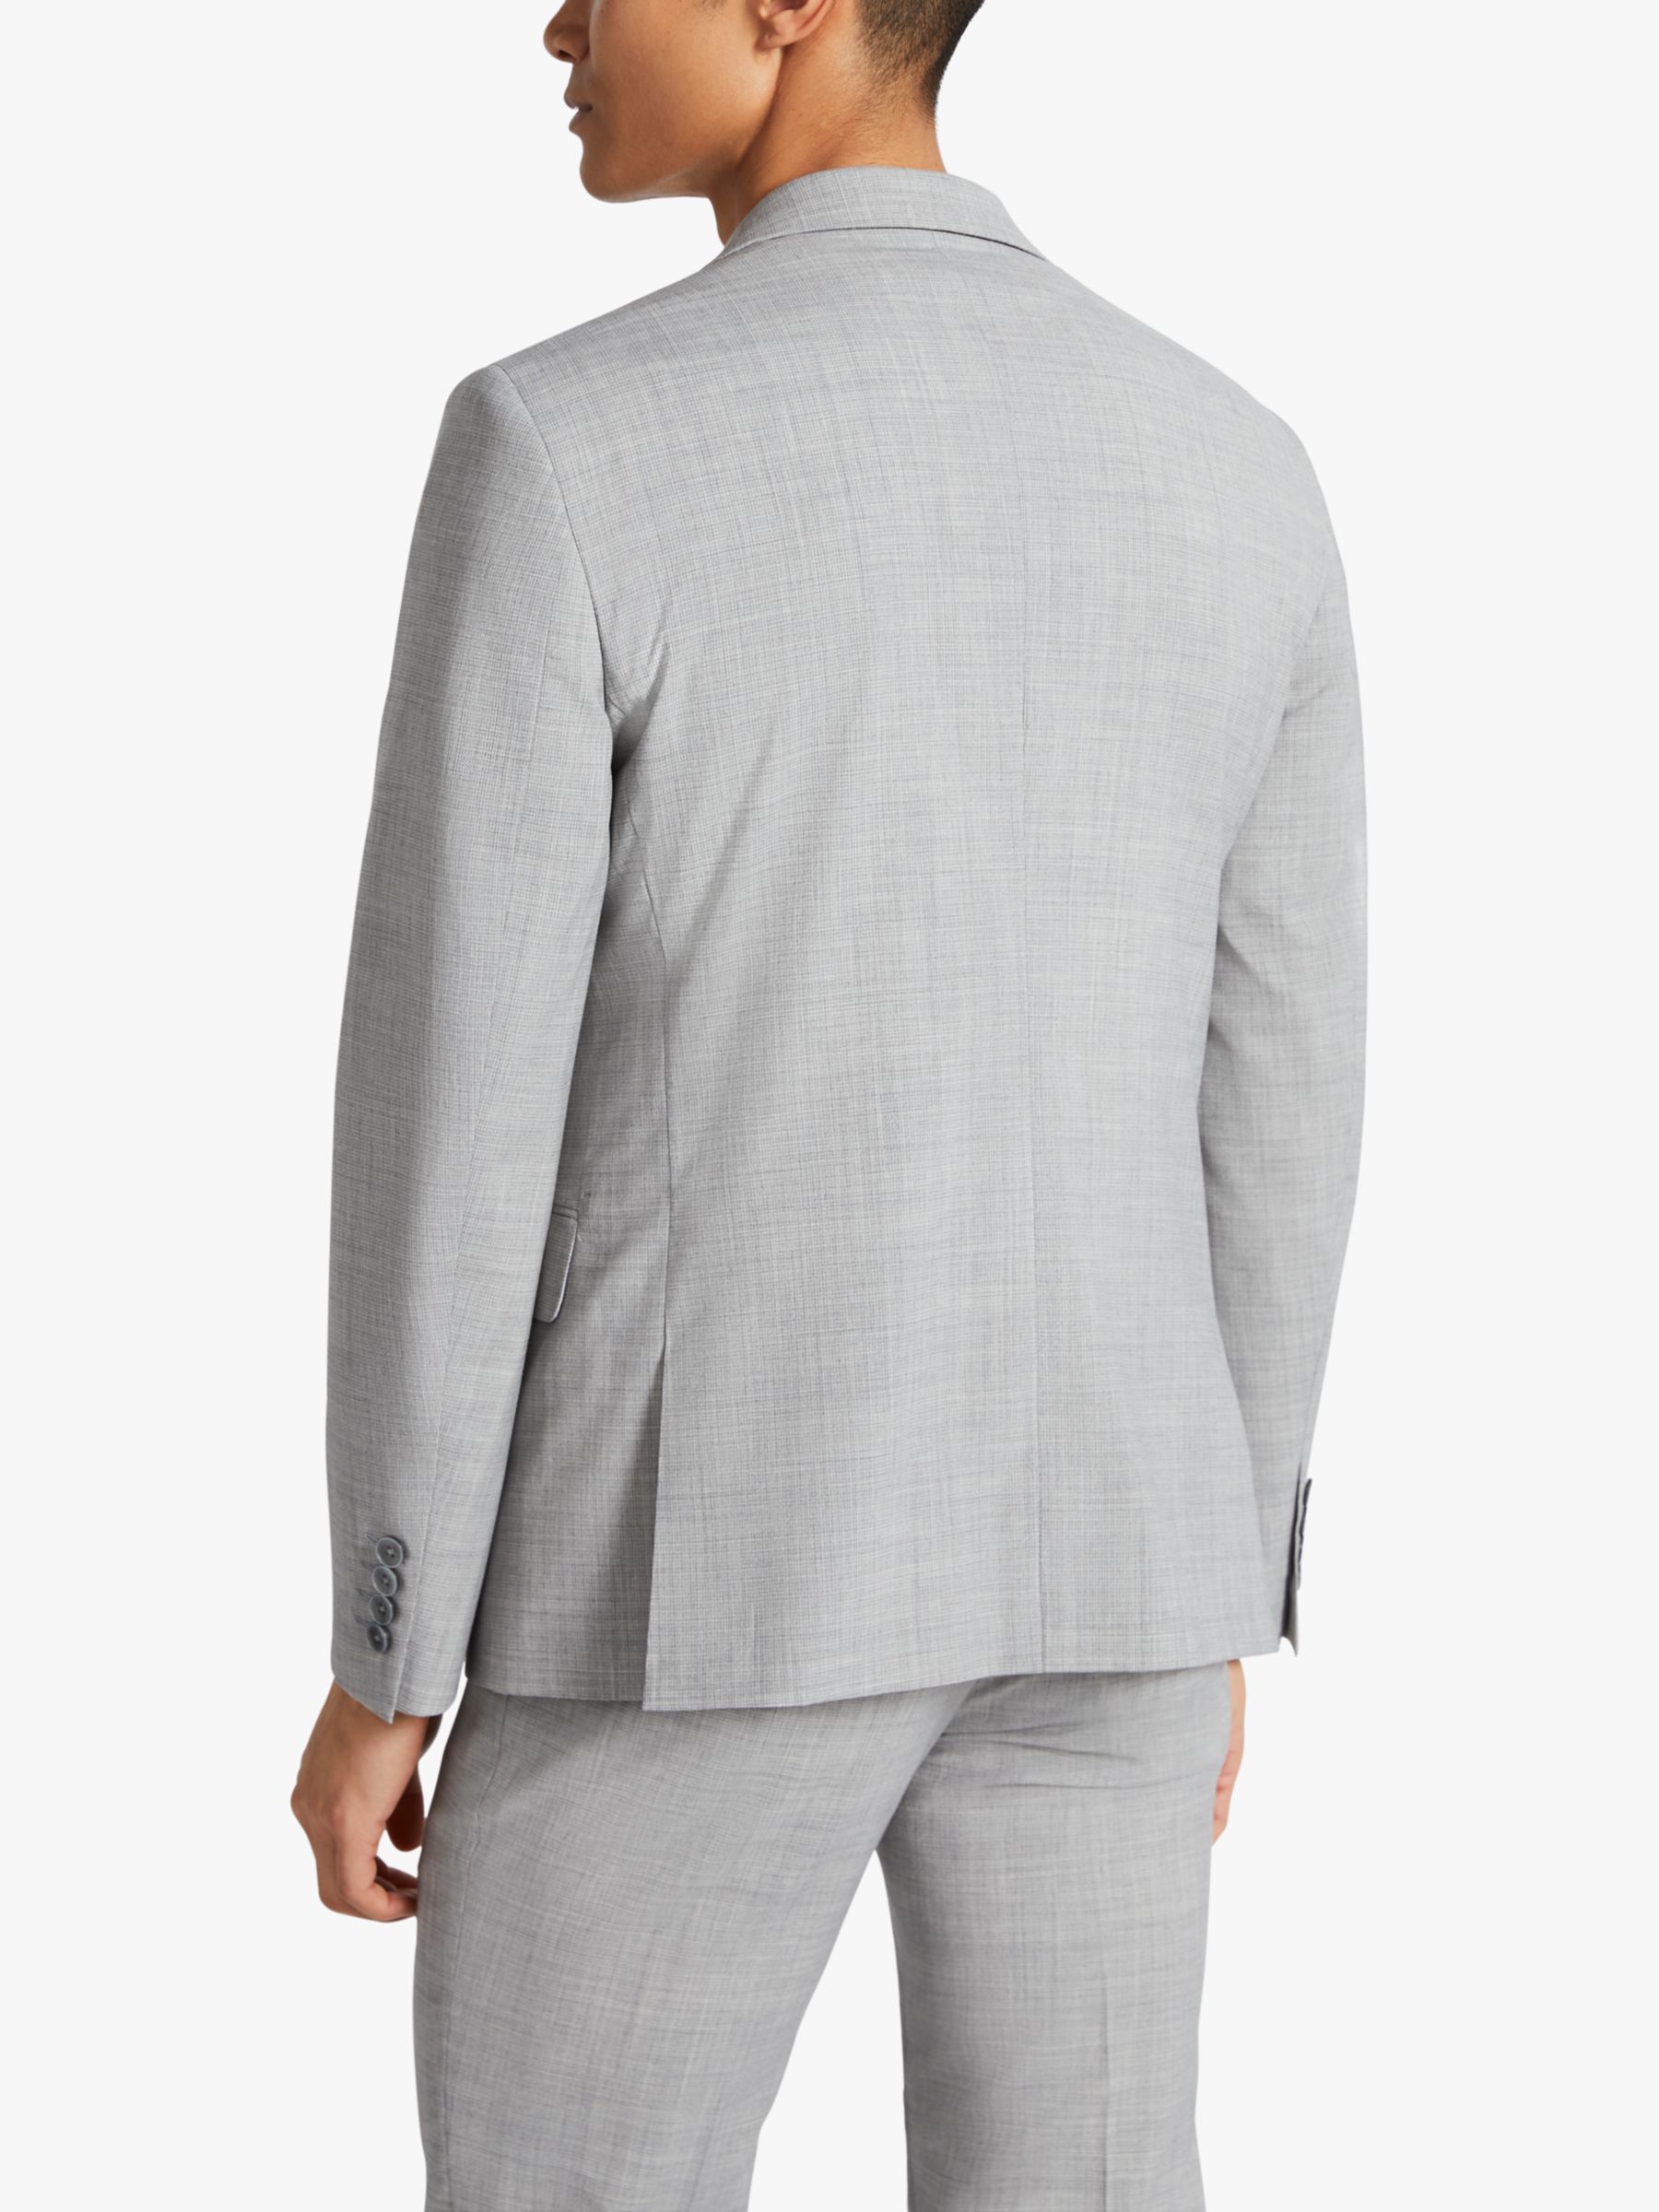 DKNY Slim Fit Suit Jacket, Grey at John Lewis & Partners